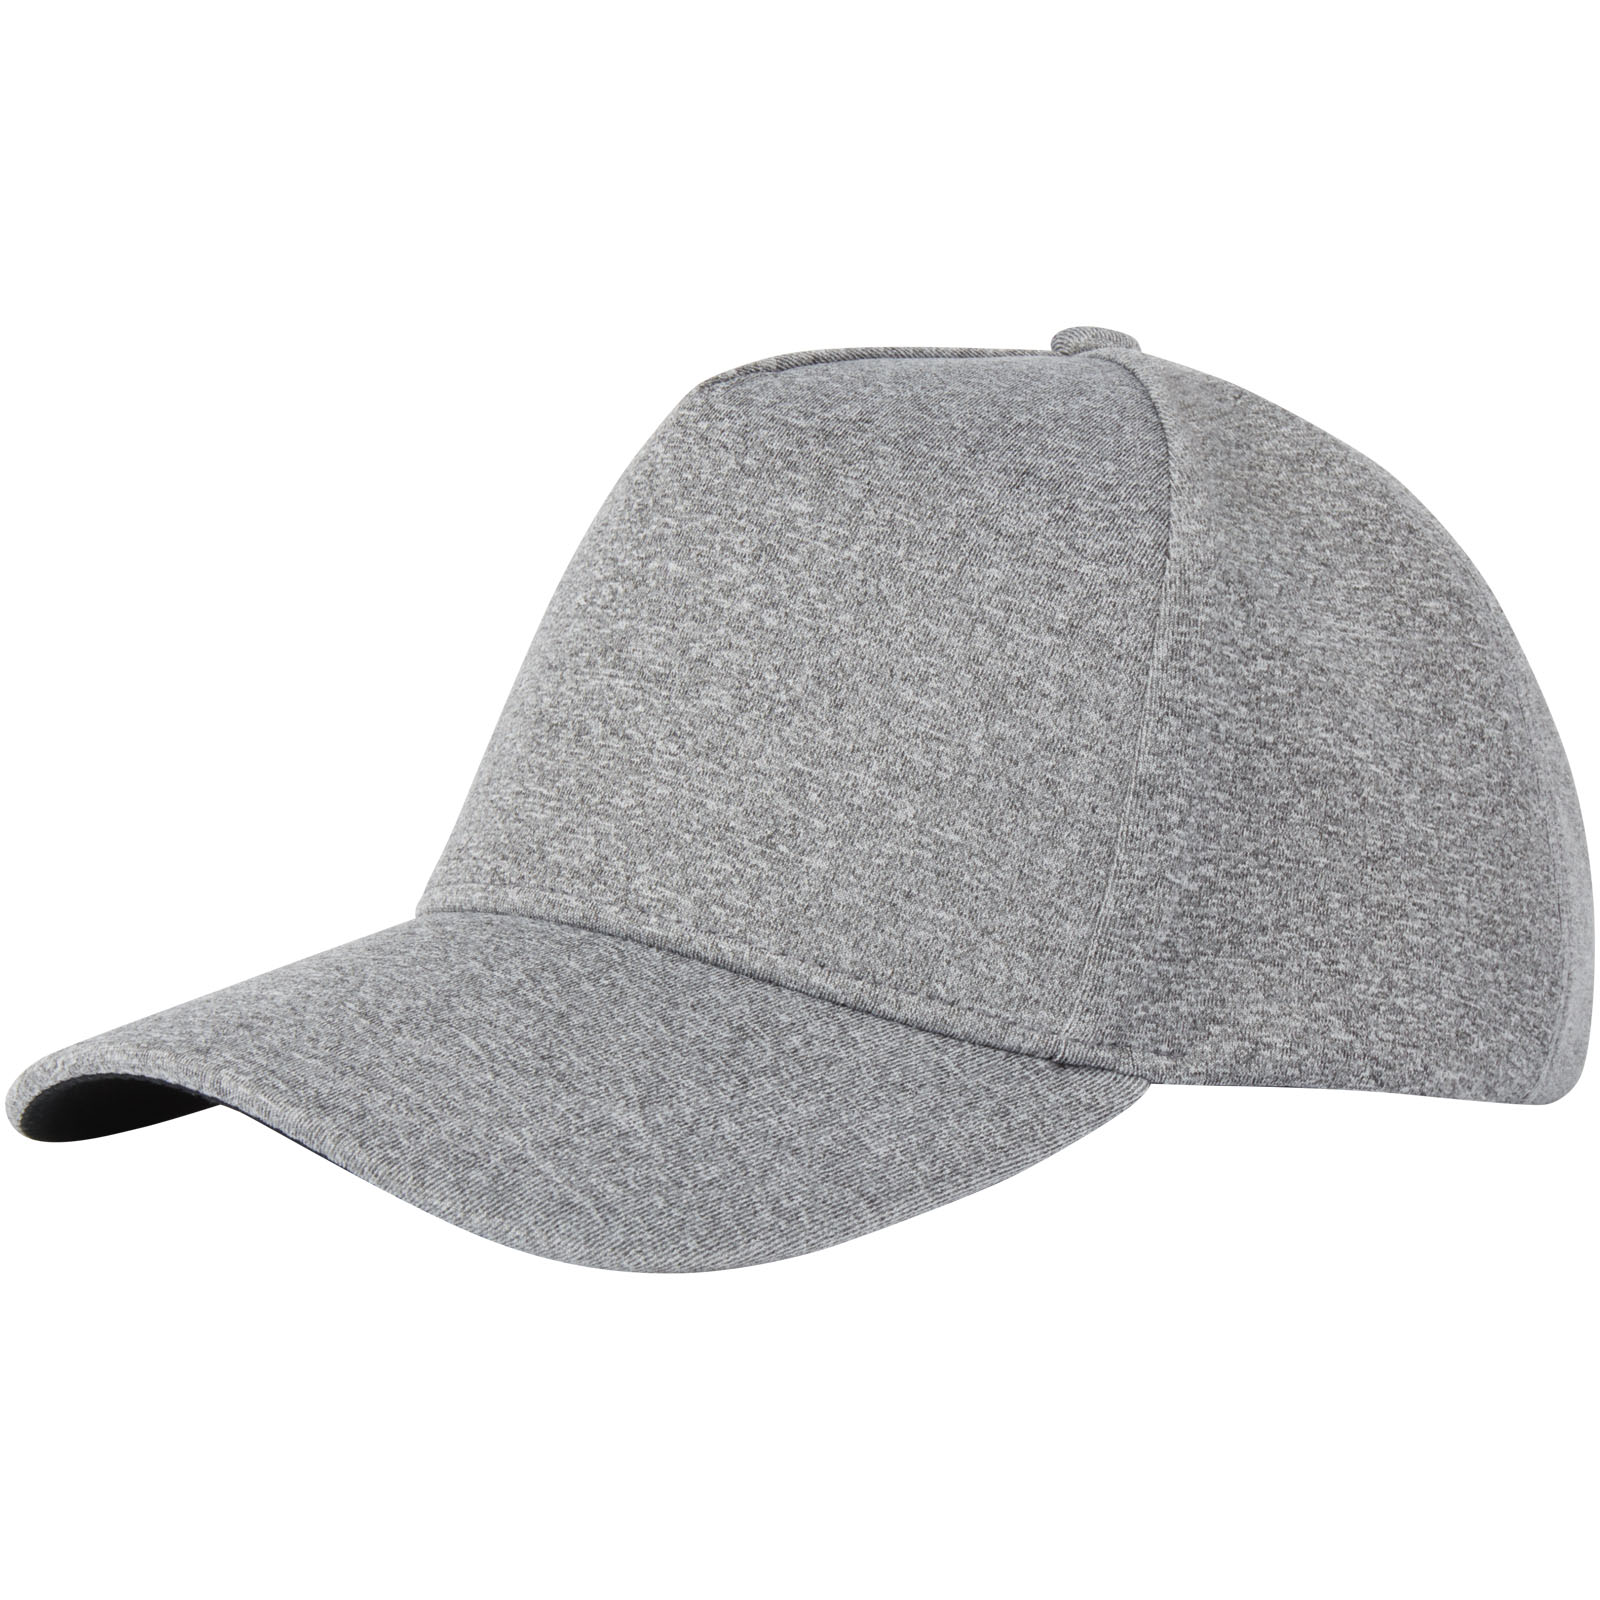 Caps & Hats - Manu 5 panel stretch cap